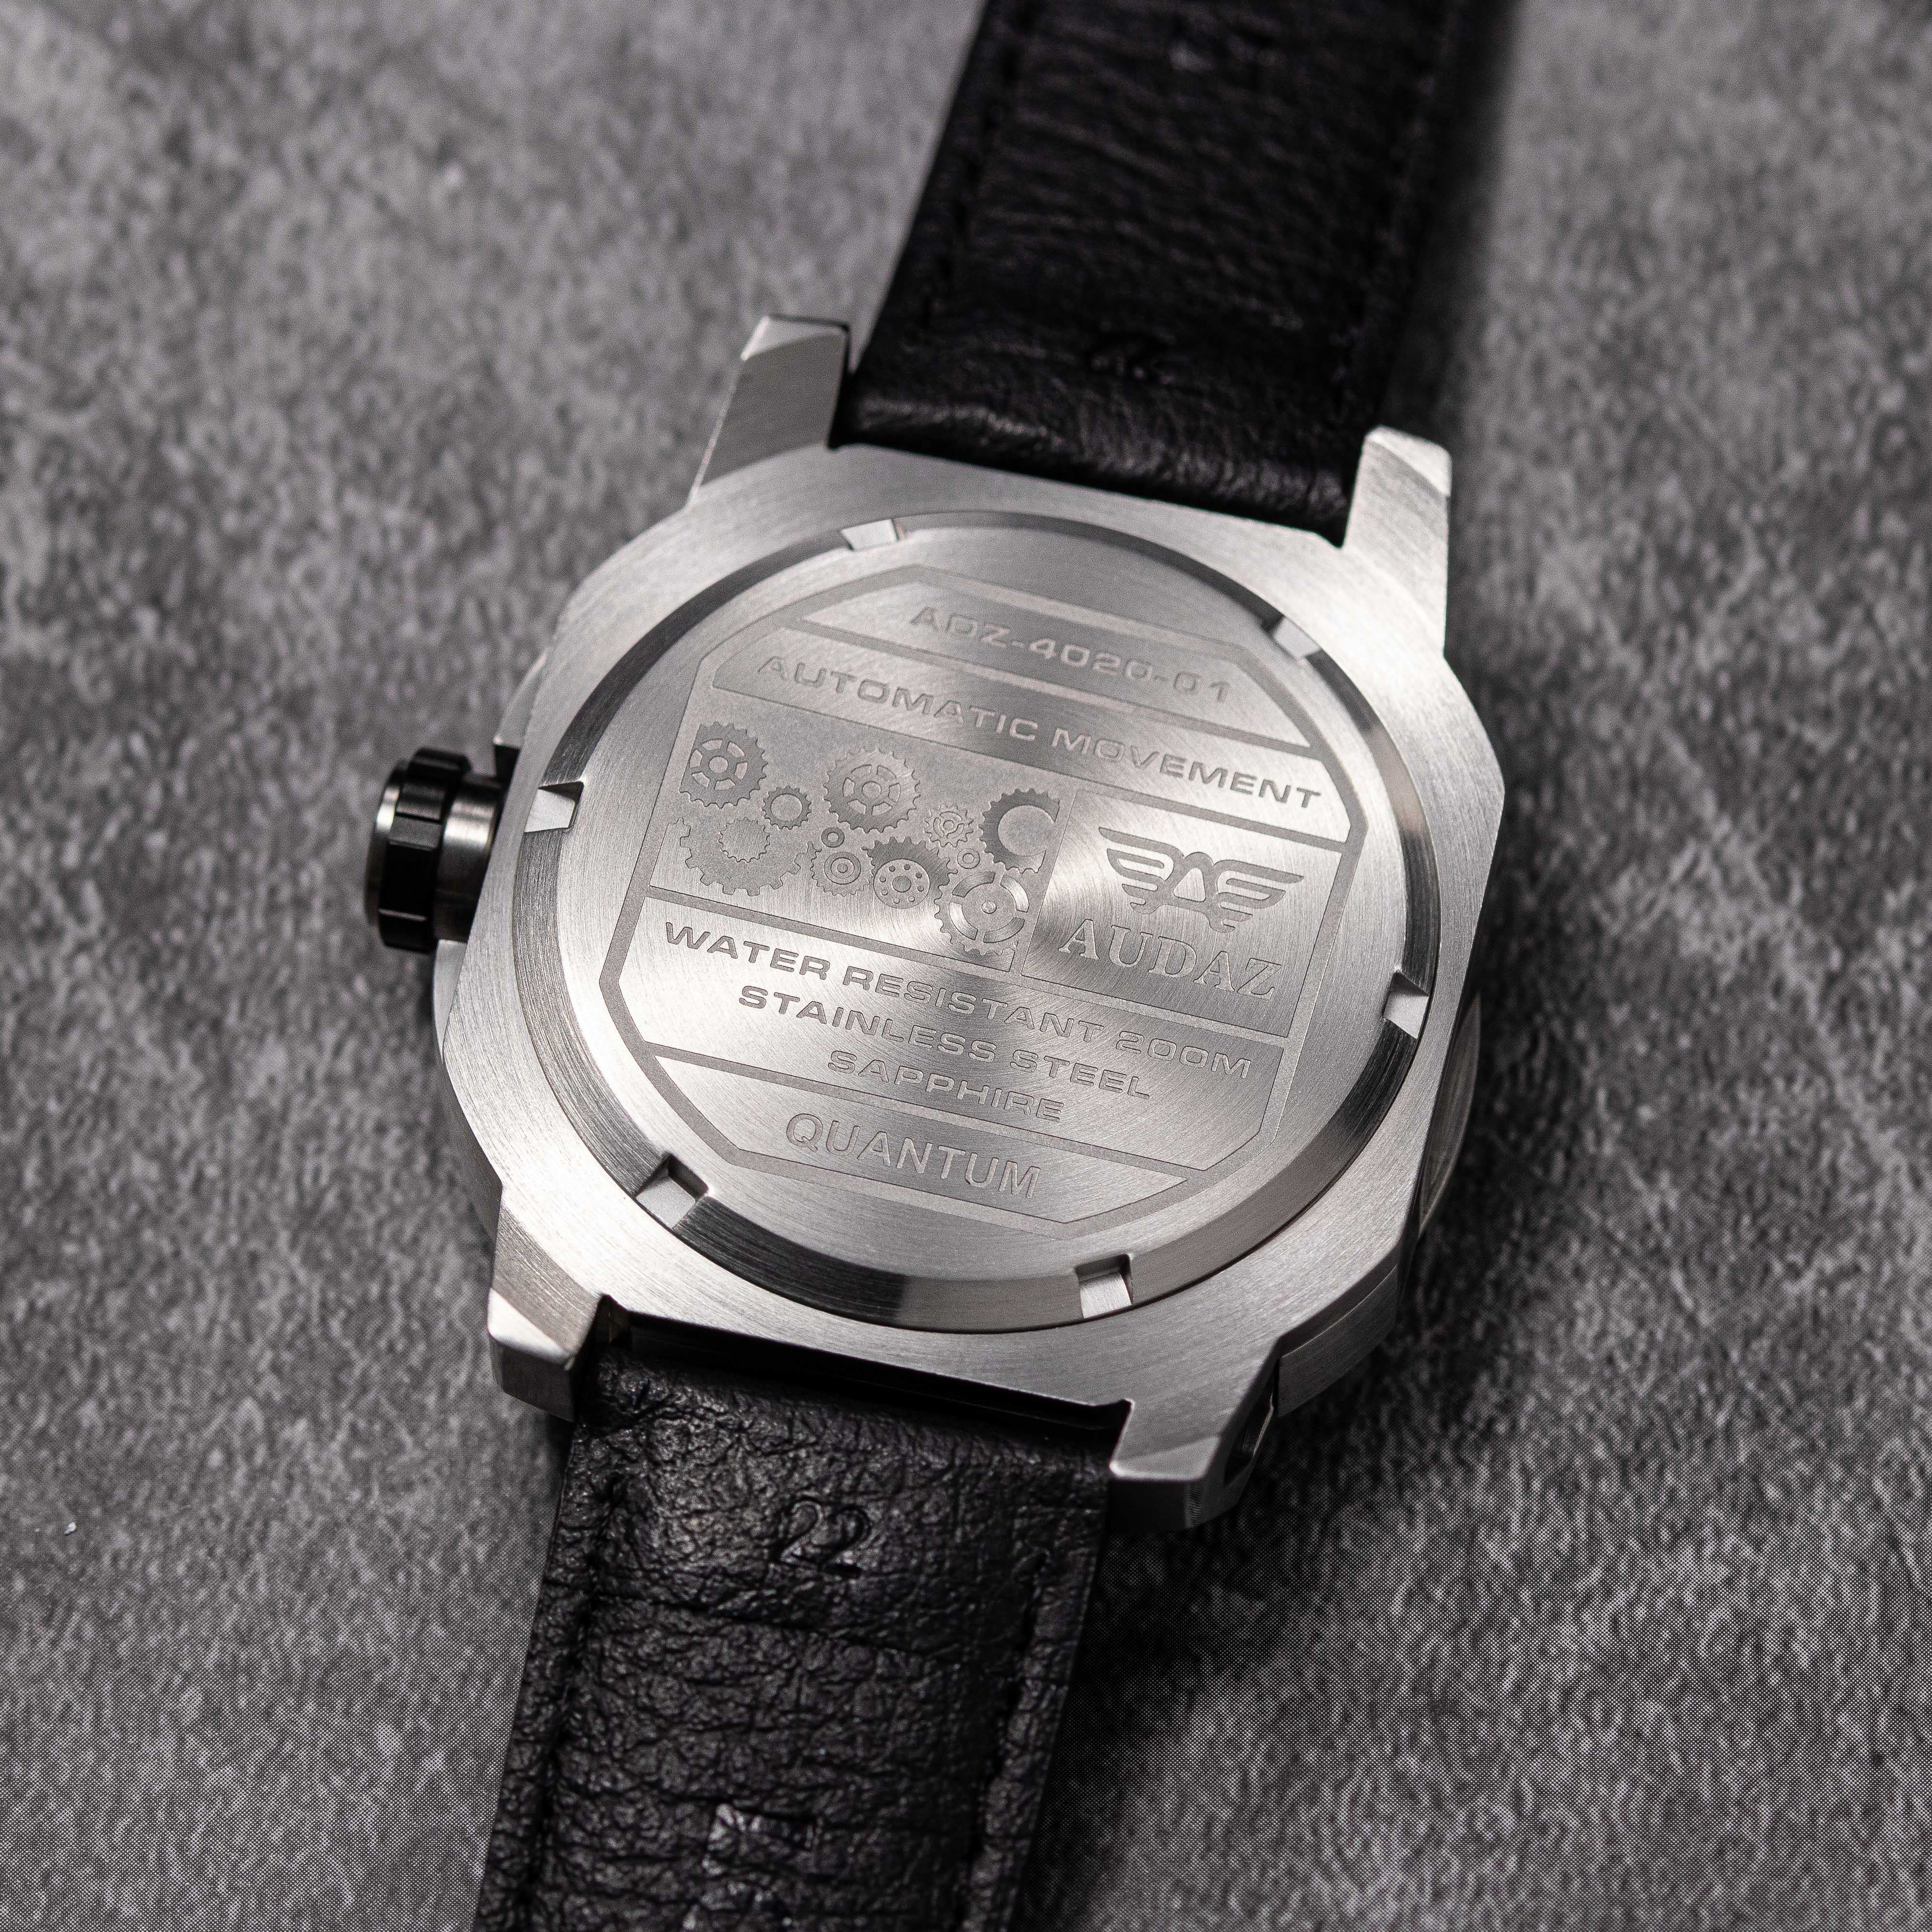 Audaz Quantum Collection I Skeletonized Automatic Movement - Audaz Watches